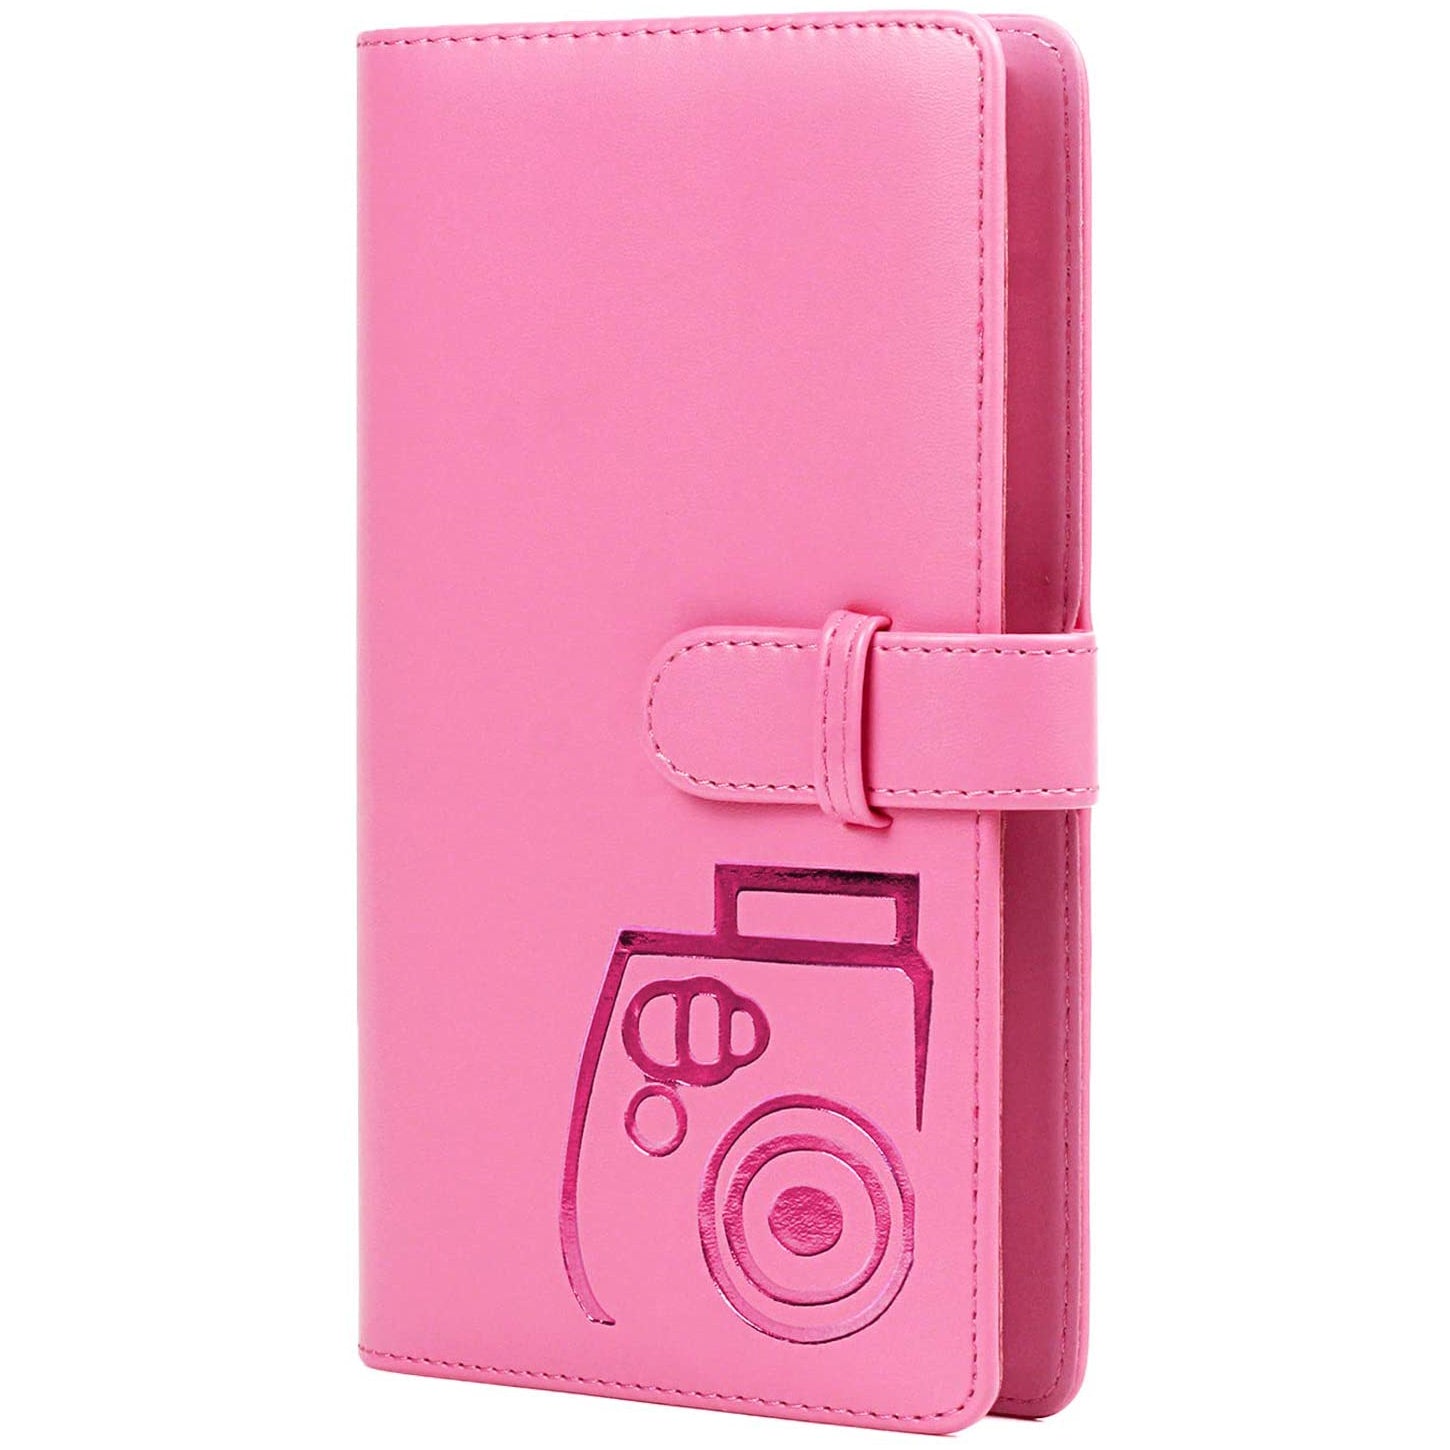 Fujifilm Instax Mini 10X1 pink lemonade Instant Film with 96-sheet Album for mini film (Flamingo pink)